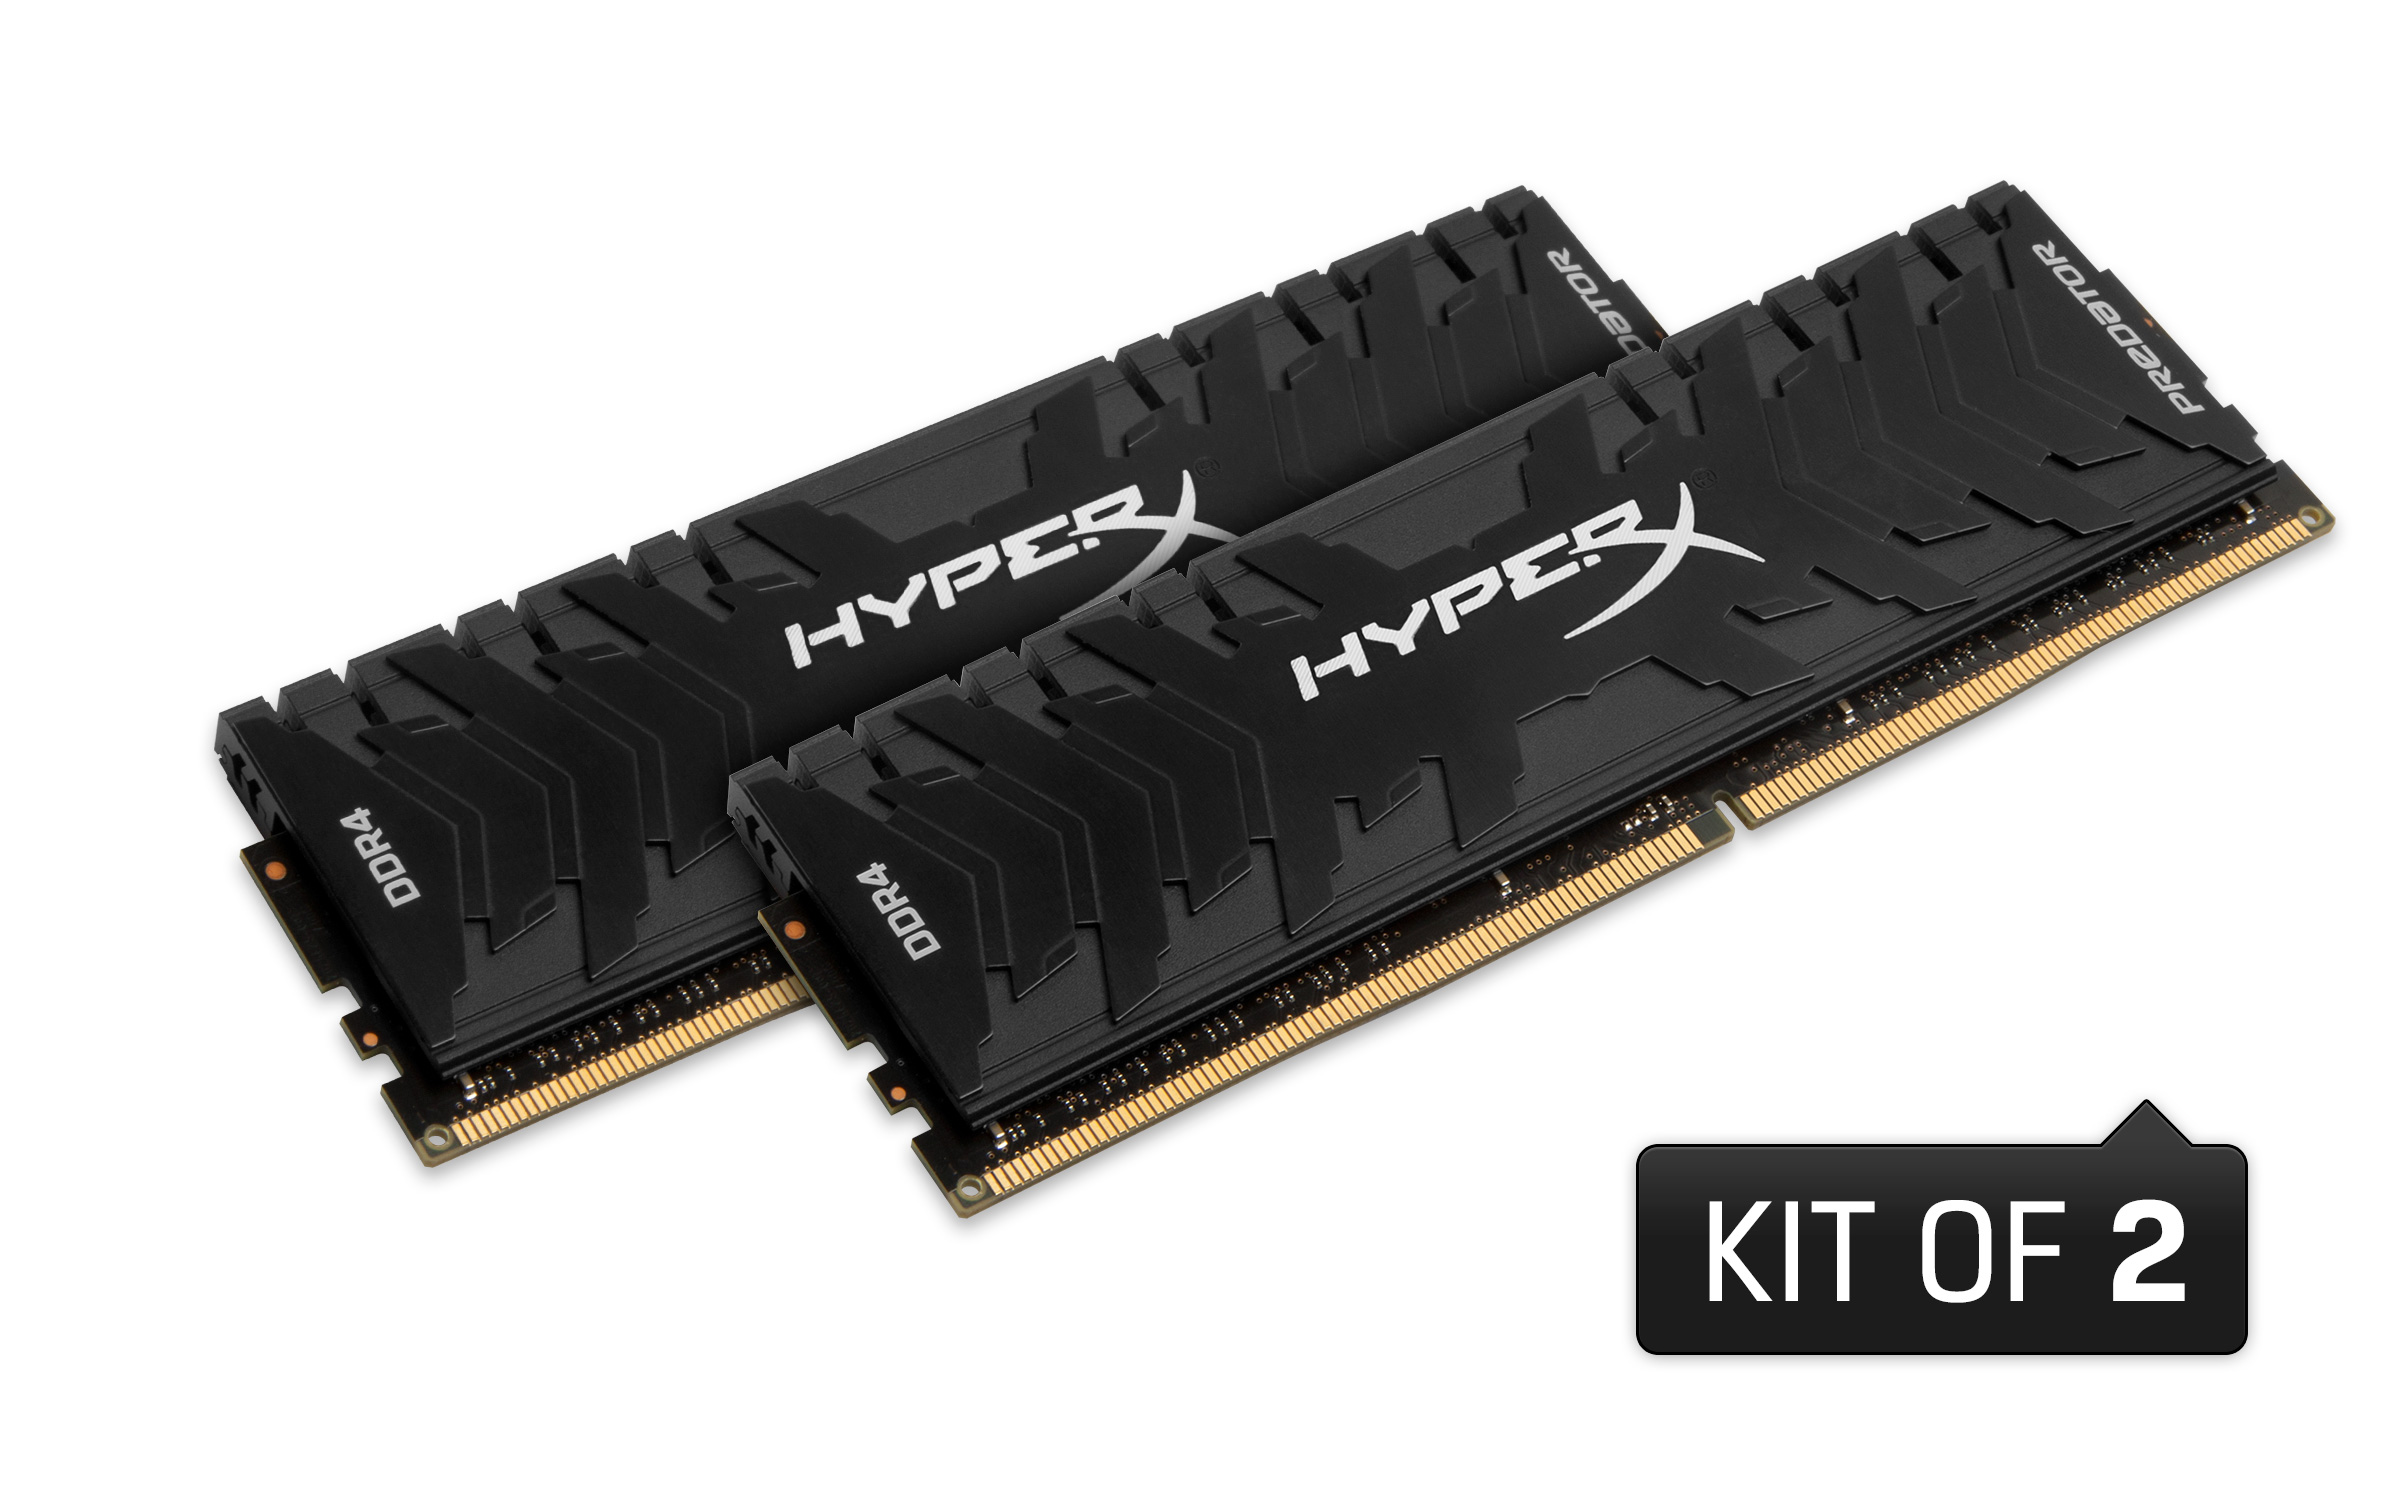 hyperx predator ddr4 kit of 2 hyperx predator3 ddr4 dimm 2 b hr 19 05 2017 13 24  HyperX เปิดตัวหน่วยความจำ Predator DDR4 เพิ่มความเร็วสูงขึ้น หน่วยความจำชุดคิท DDR4 16GB ที่ประกอบด้วย 4266MHz และ 4600MHz